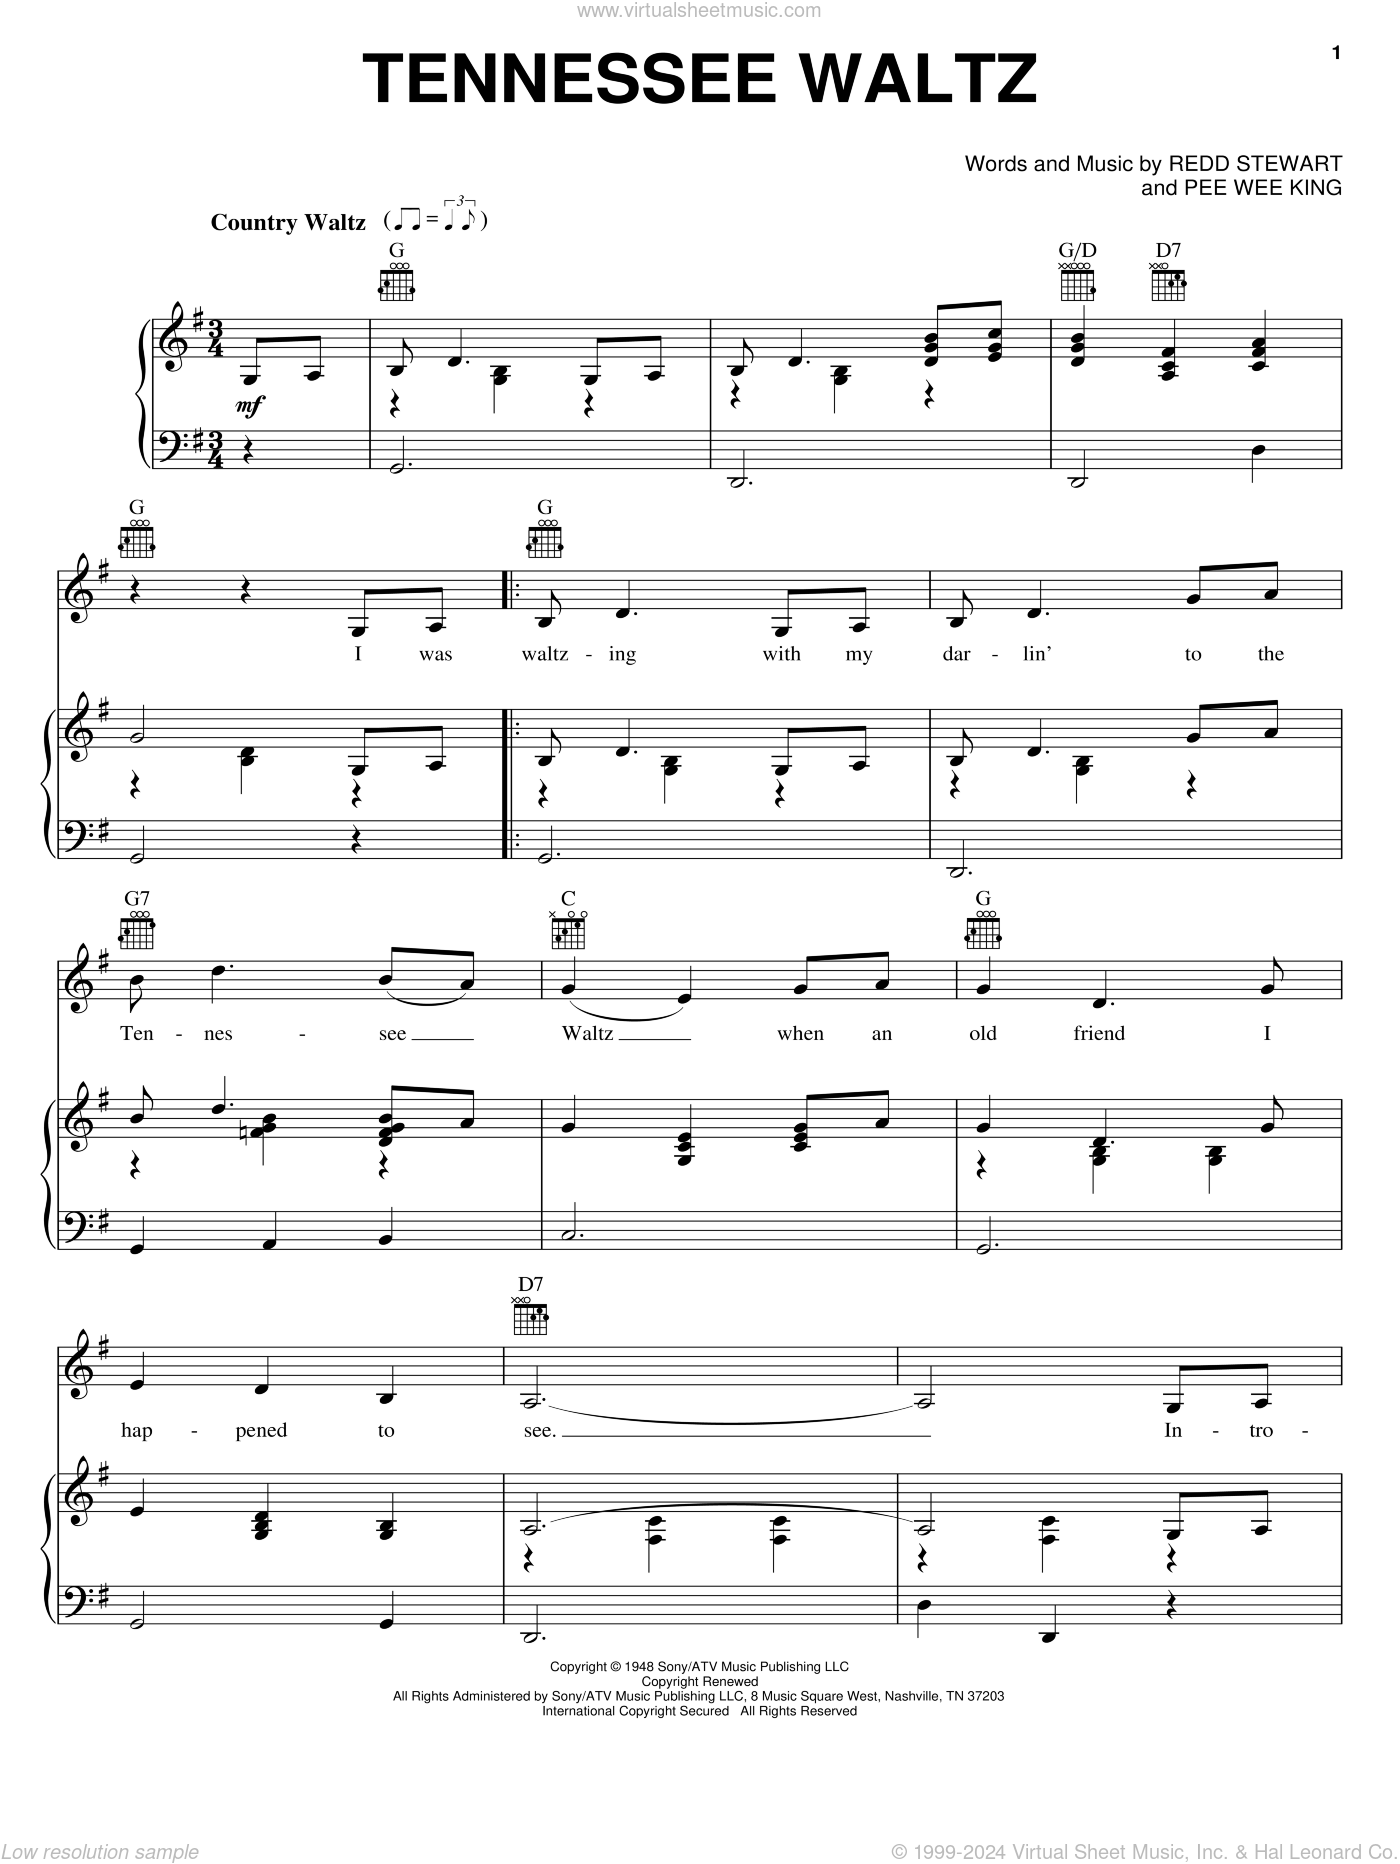 waltz sheet tennessee piano guitar voice score stewart patti hl key virtualsheetmusic king wee play